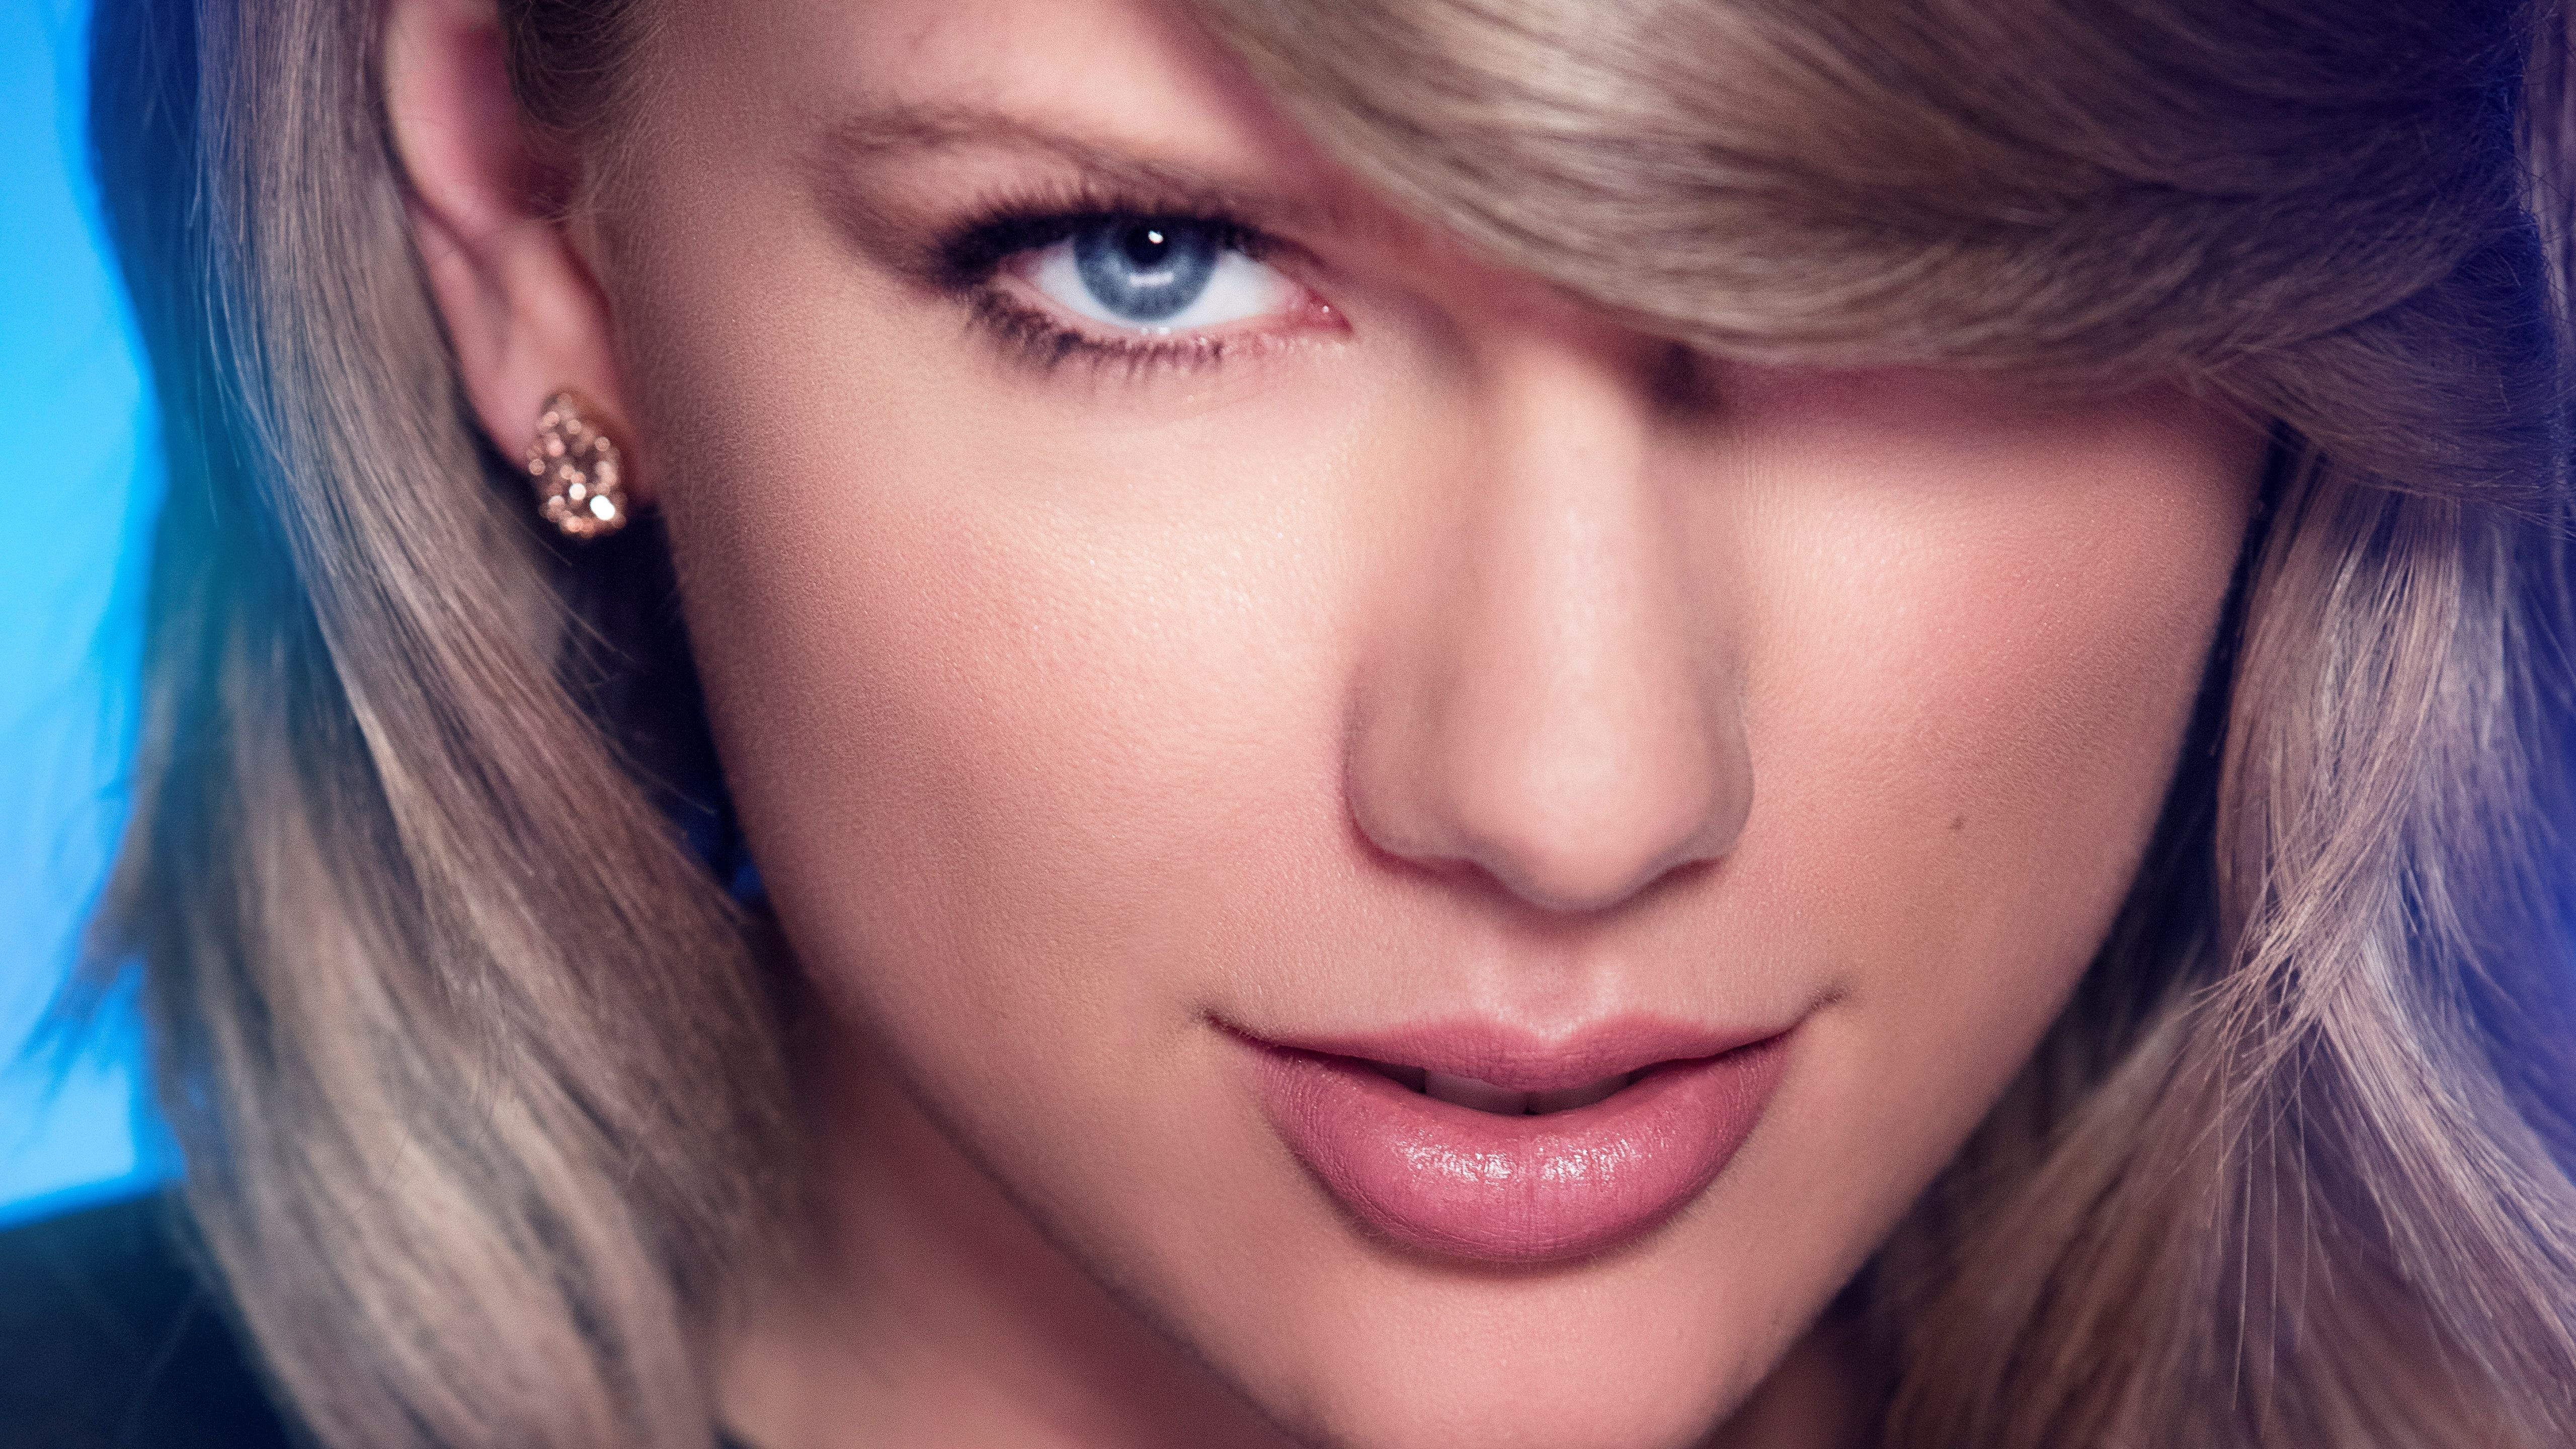 People 5120x2880 Taylor Swift celebrity singer women blonde face closeup